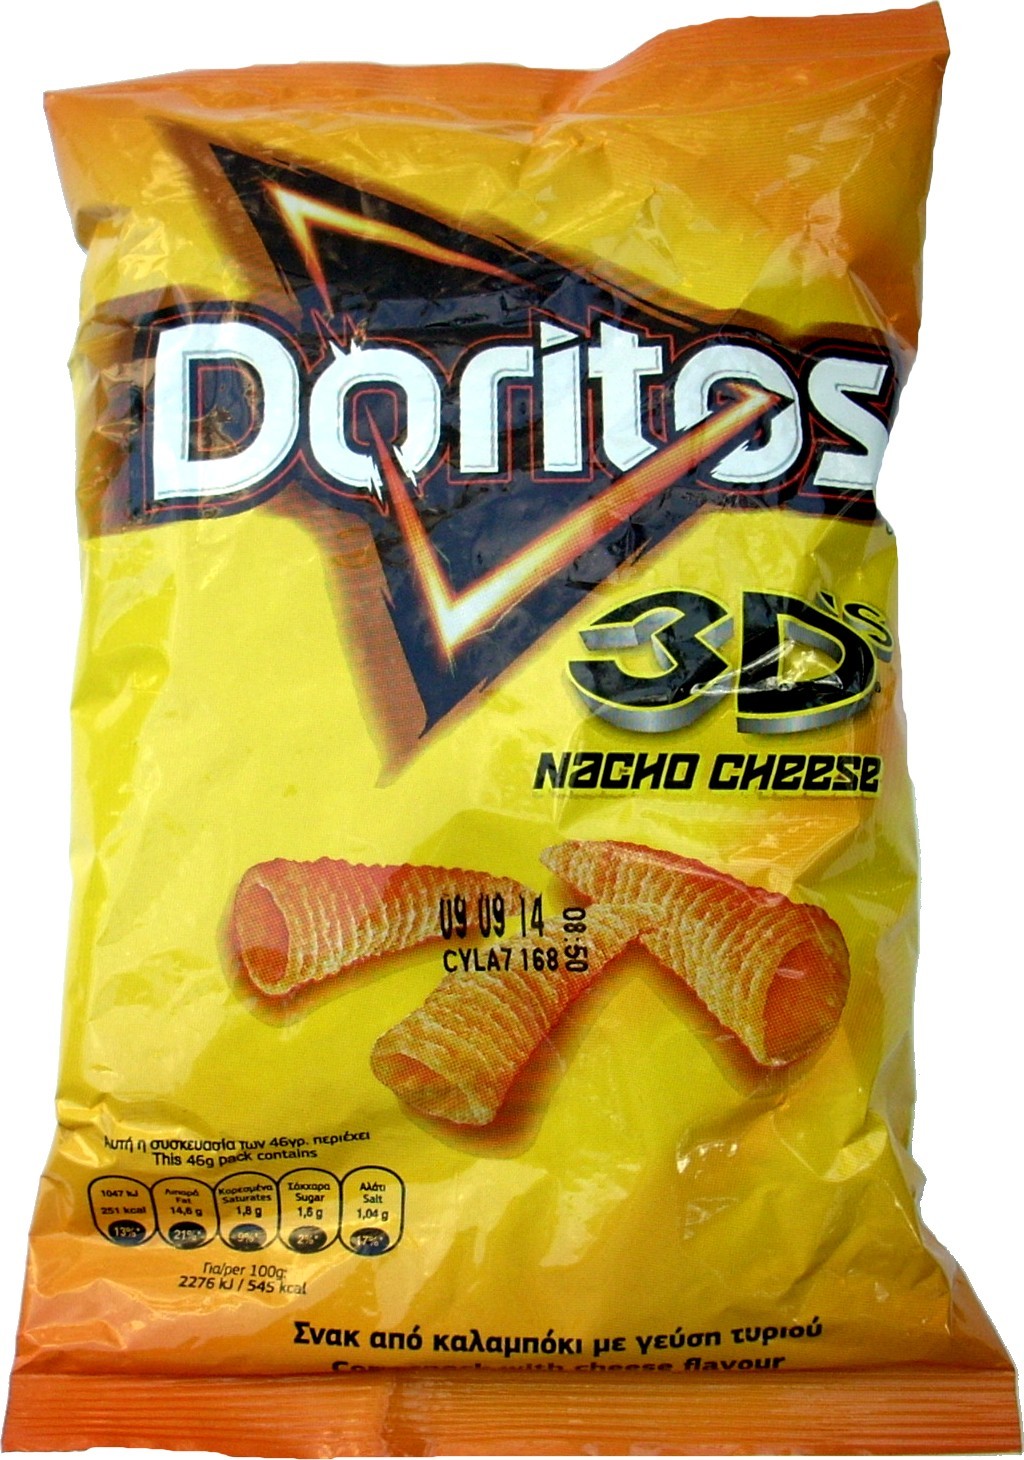 lays-doritos-3ds-nacho-cheese-corn-snacks-46g.jpg